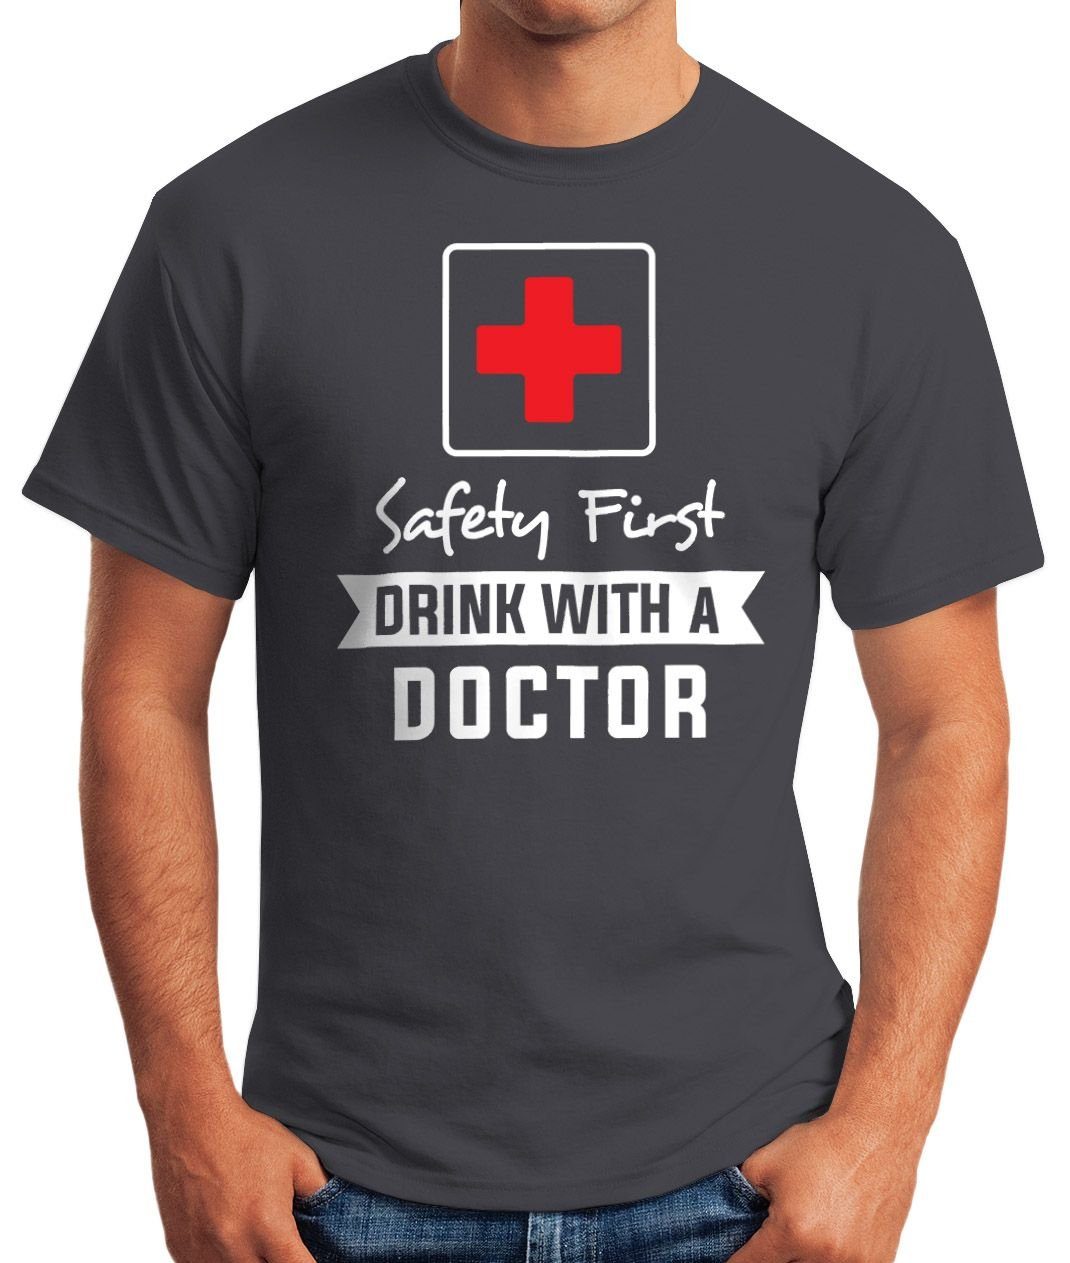 MoonWorks Print-Shirt Herren T-Shirt Party-Shirt Safety grau with doctor Fun-Shirt First drink a Moonworks® mit Print